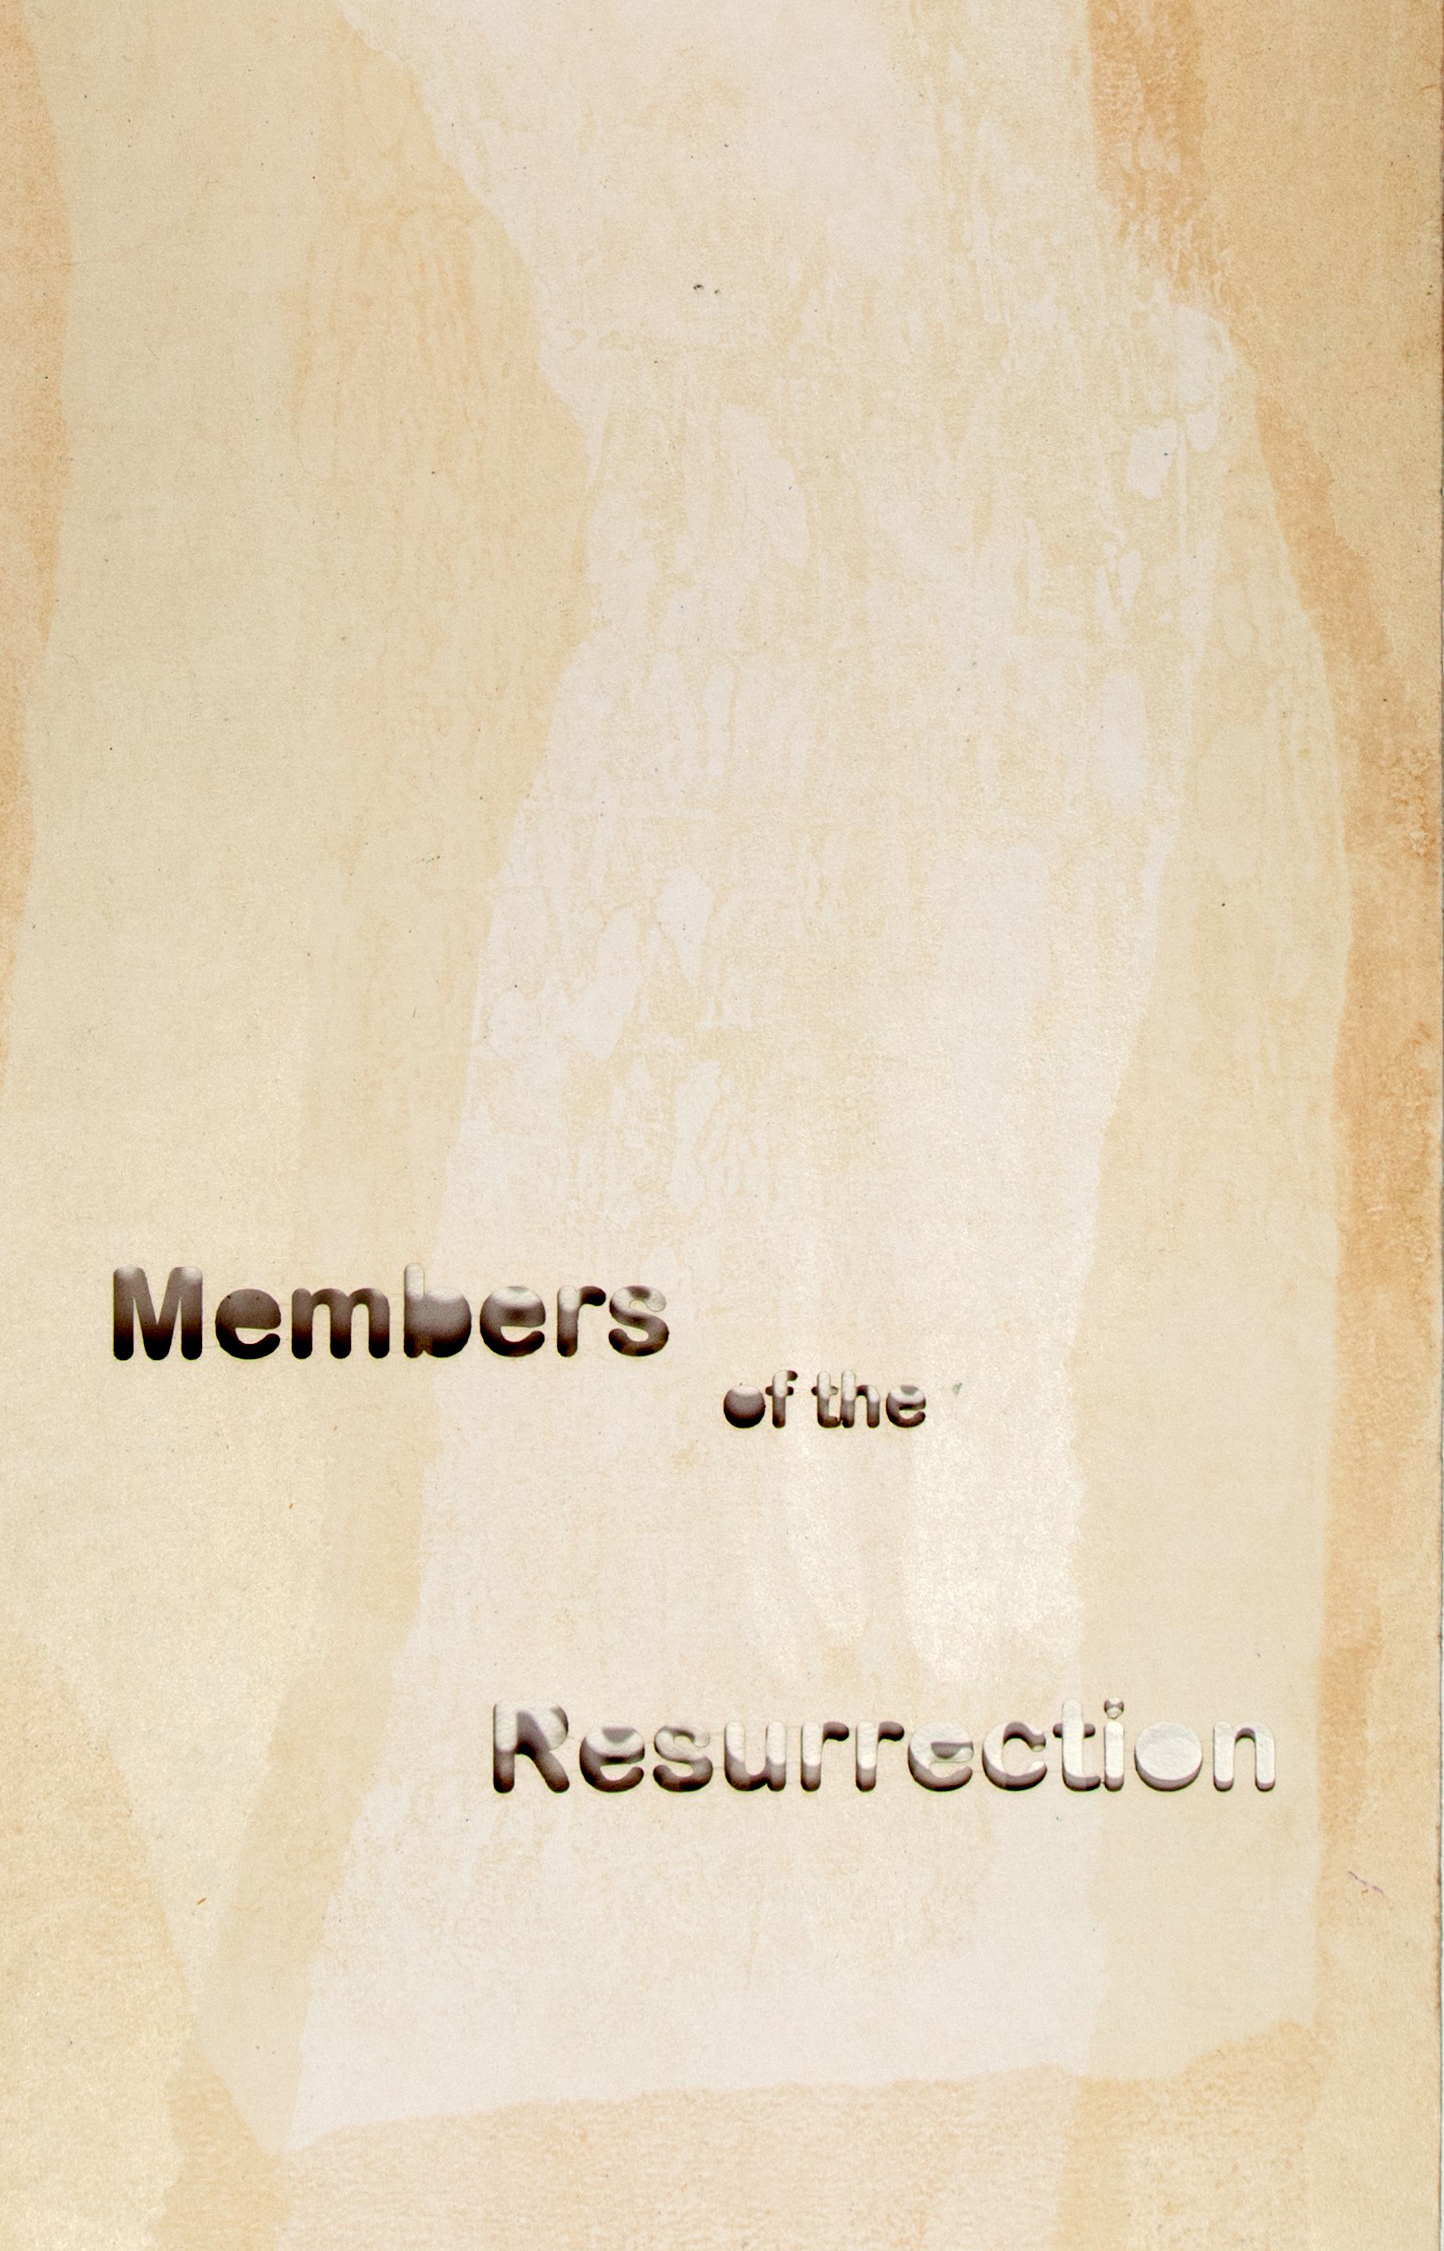 Jane Slade, Banner series | Members of the Resurrection